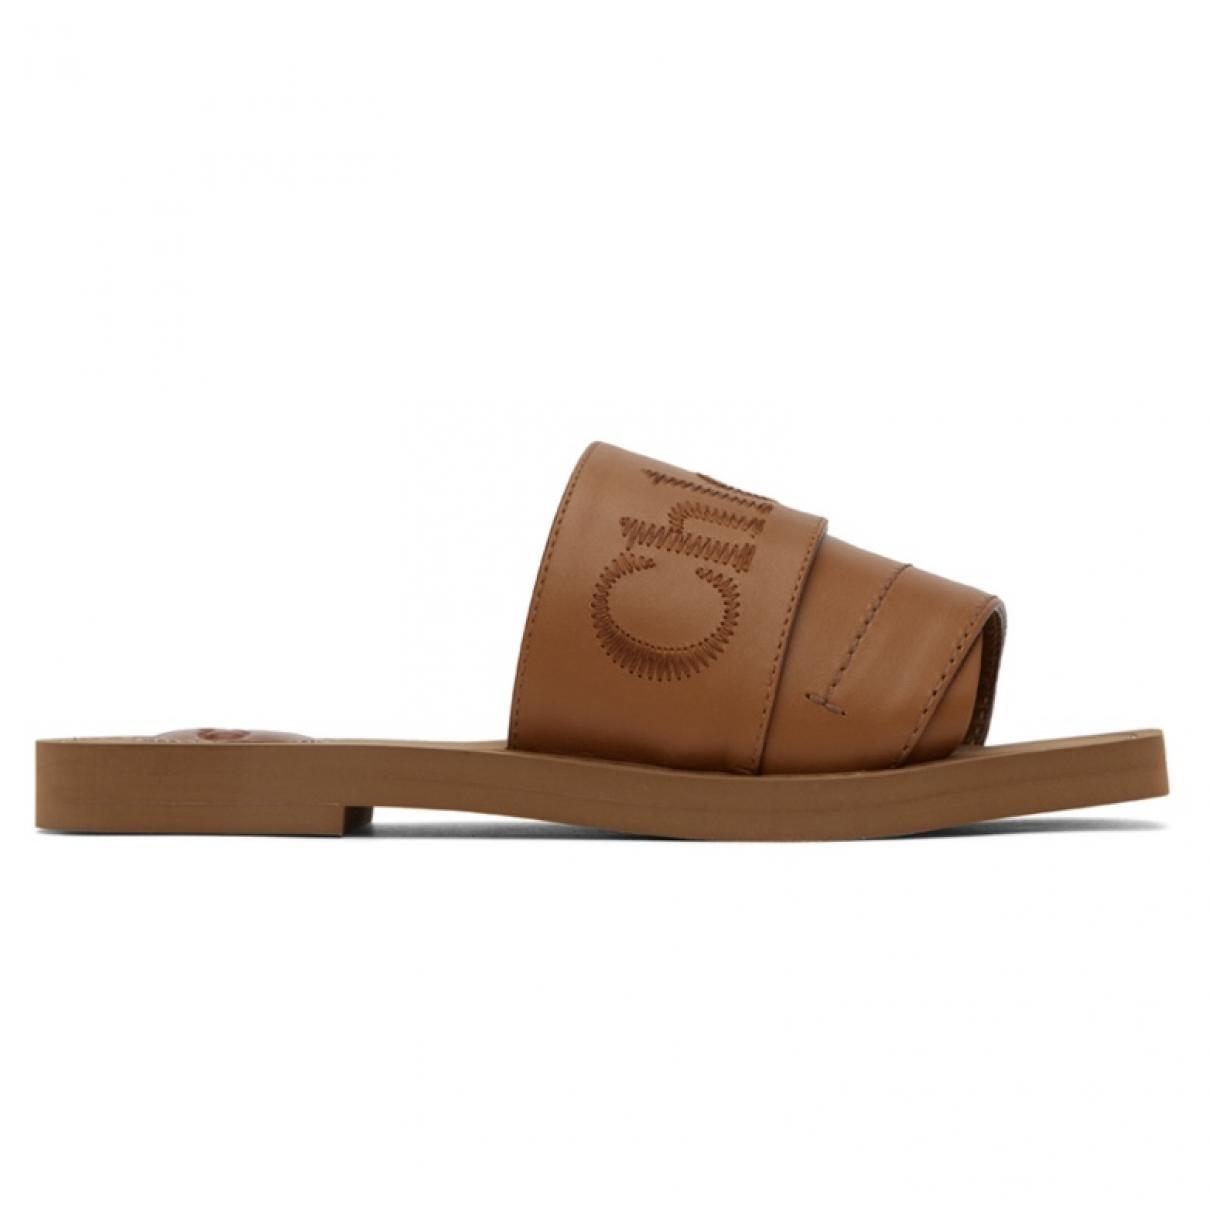 Leather sandal - 2